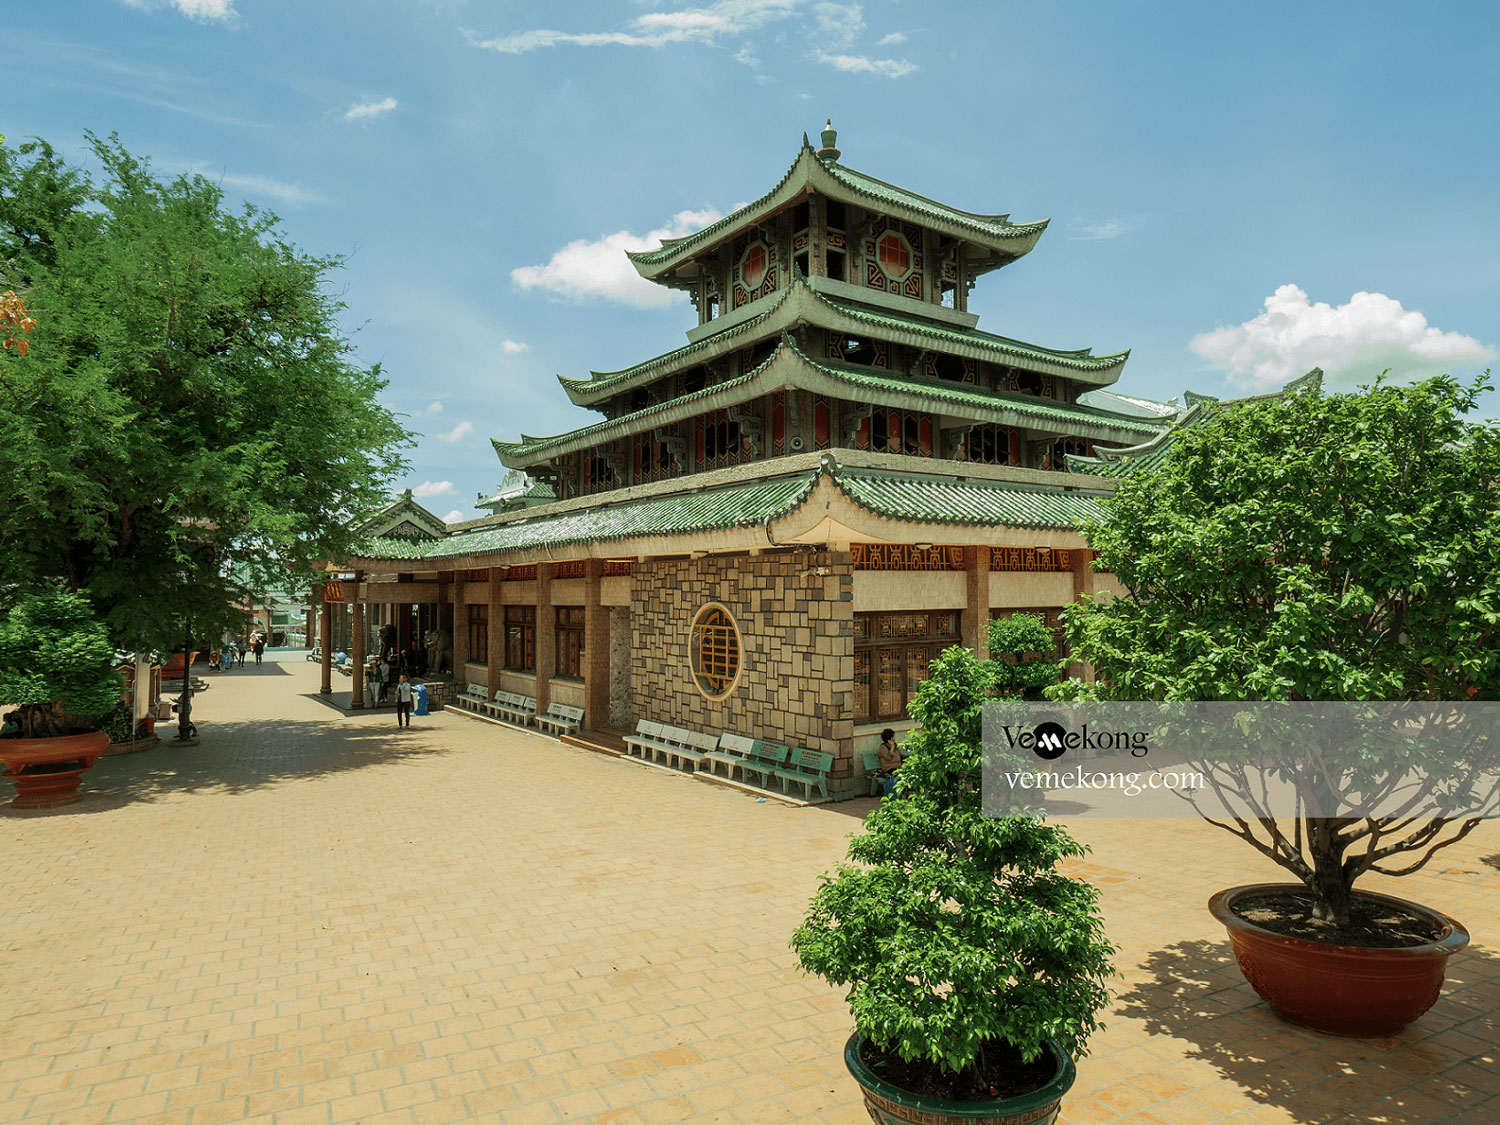 The Lady Temple – The Ba Chua Xu Temple in Chau Doc